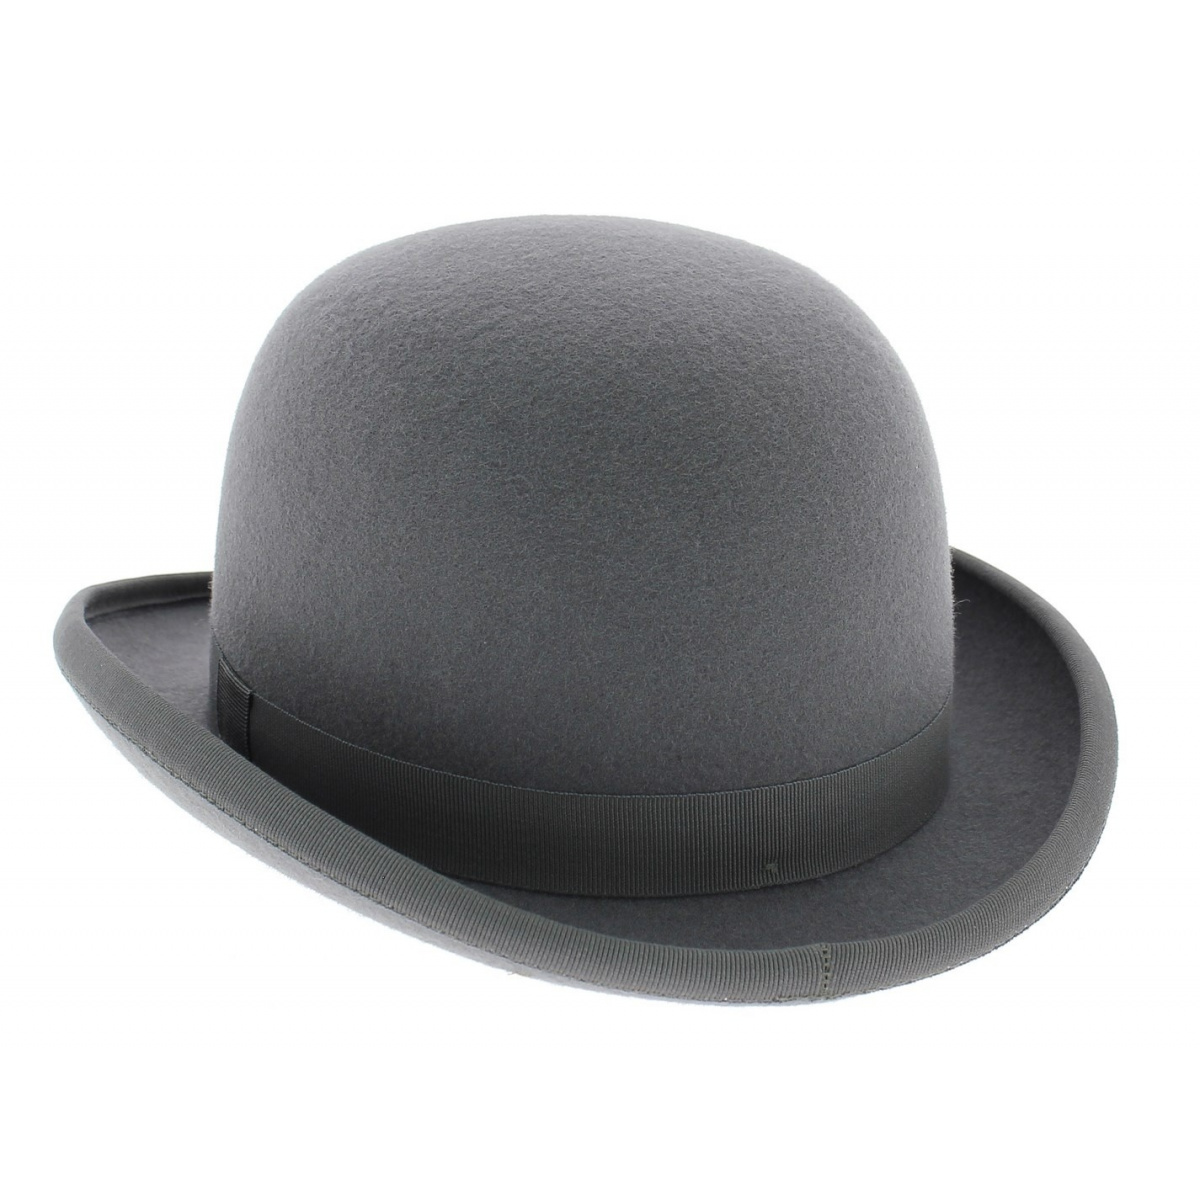 Premium Quality GREY Hard Top 100% Wool Felt Bowler Hat 